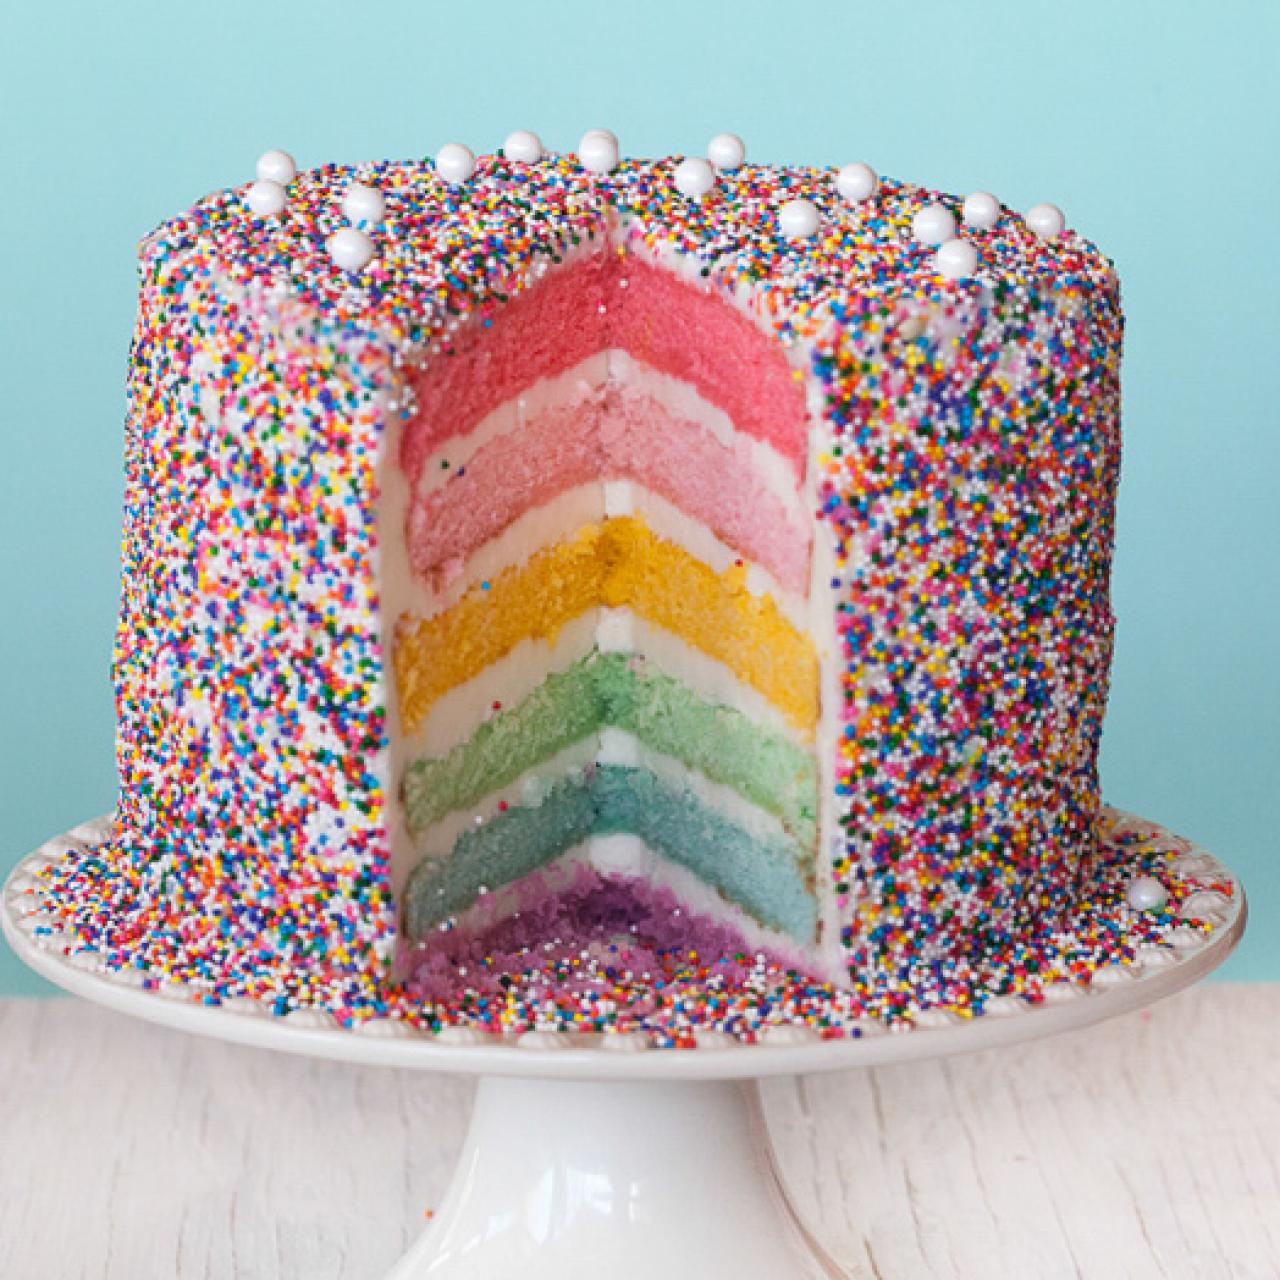 Rainbow Layer Cake Recipe, Jackie Alpers